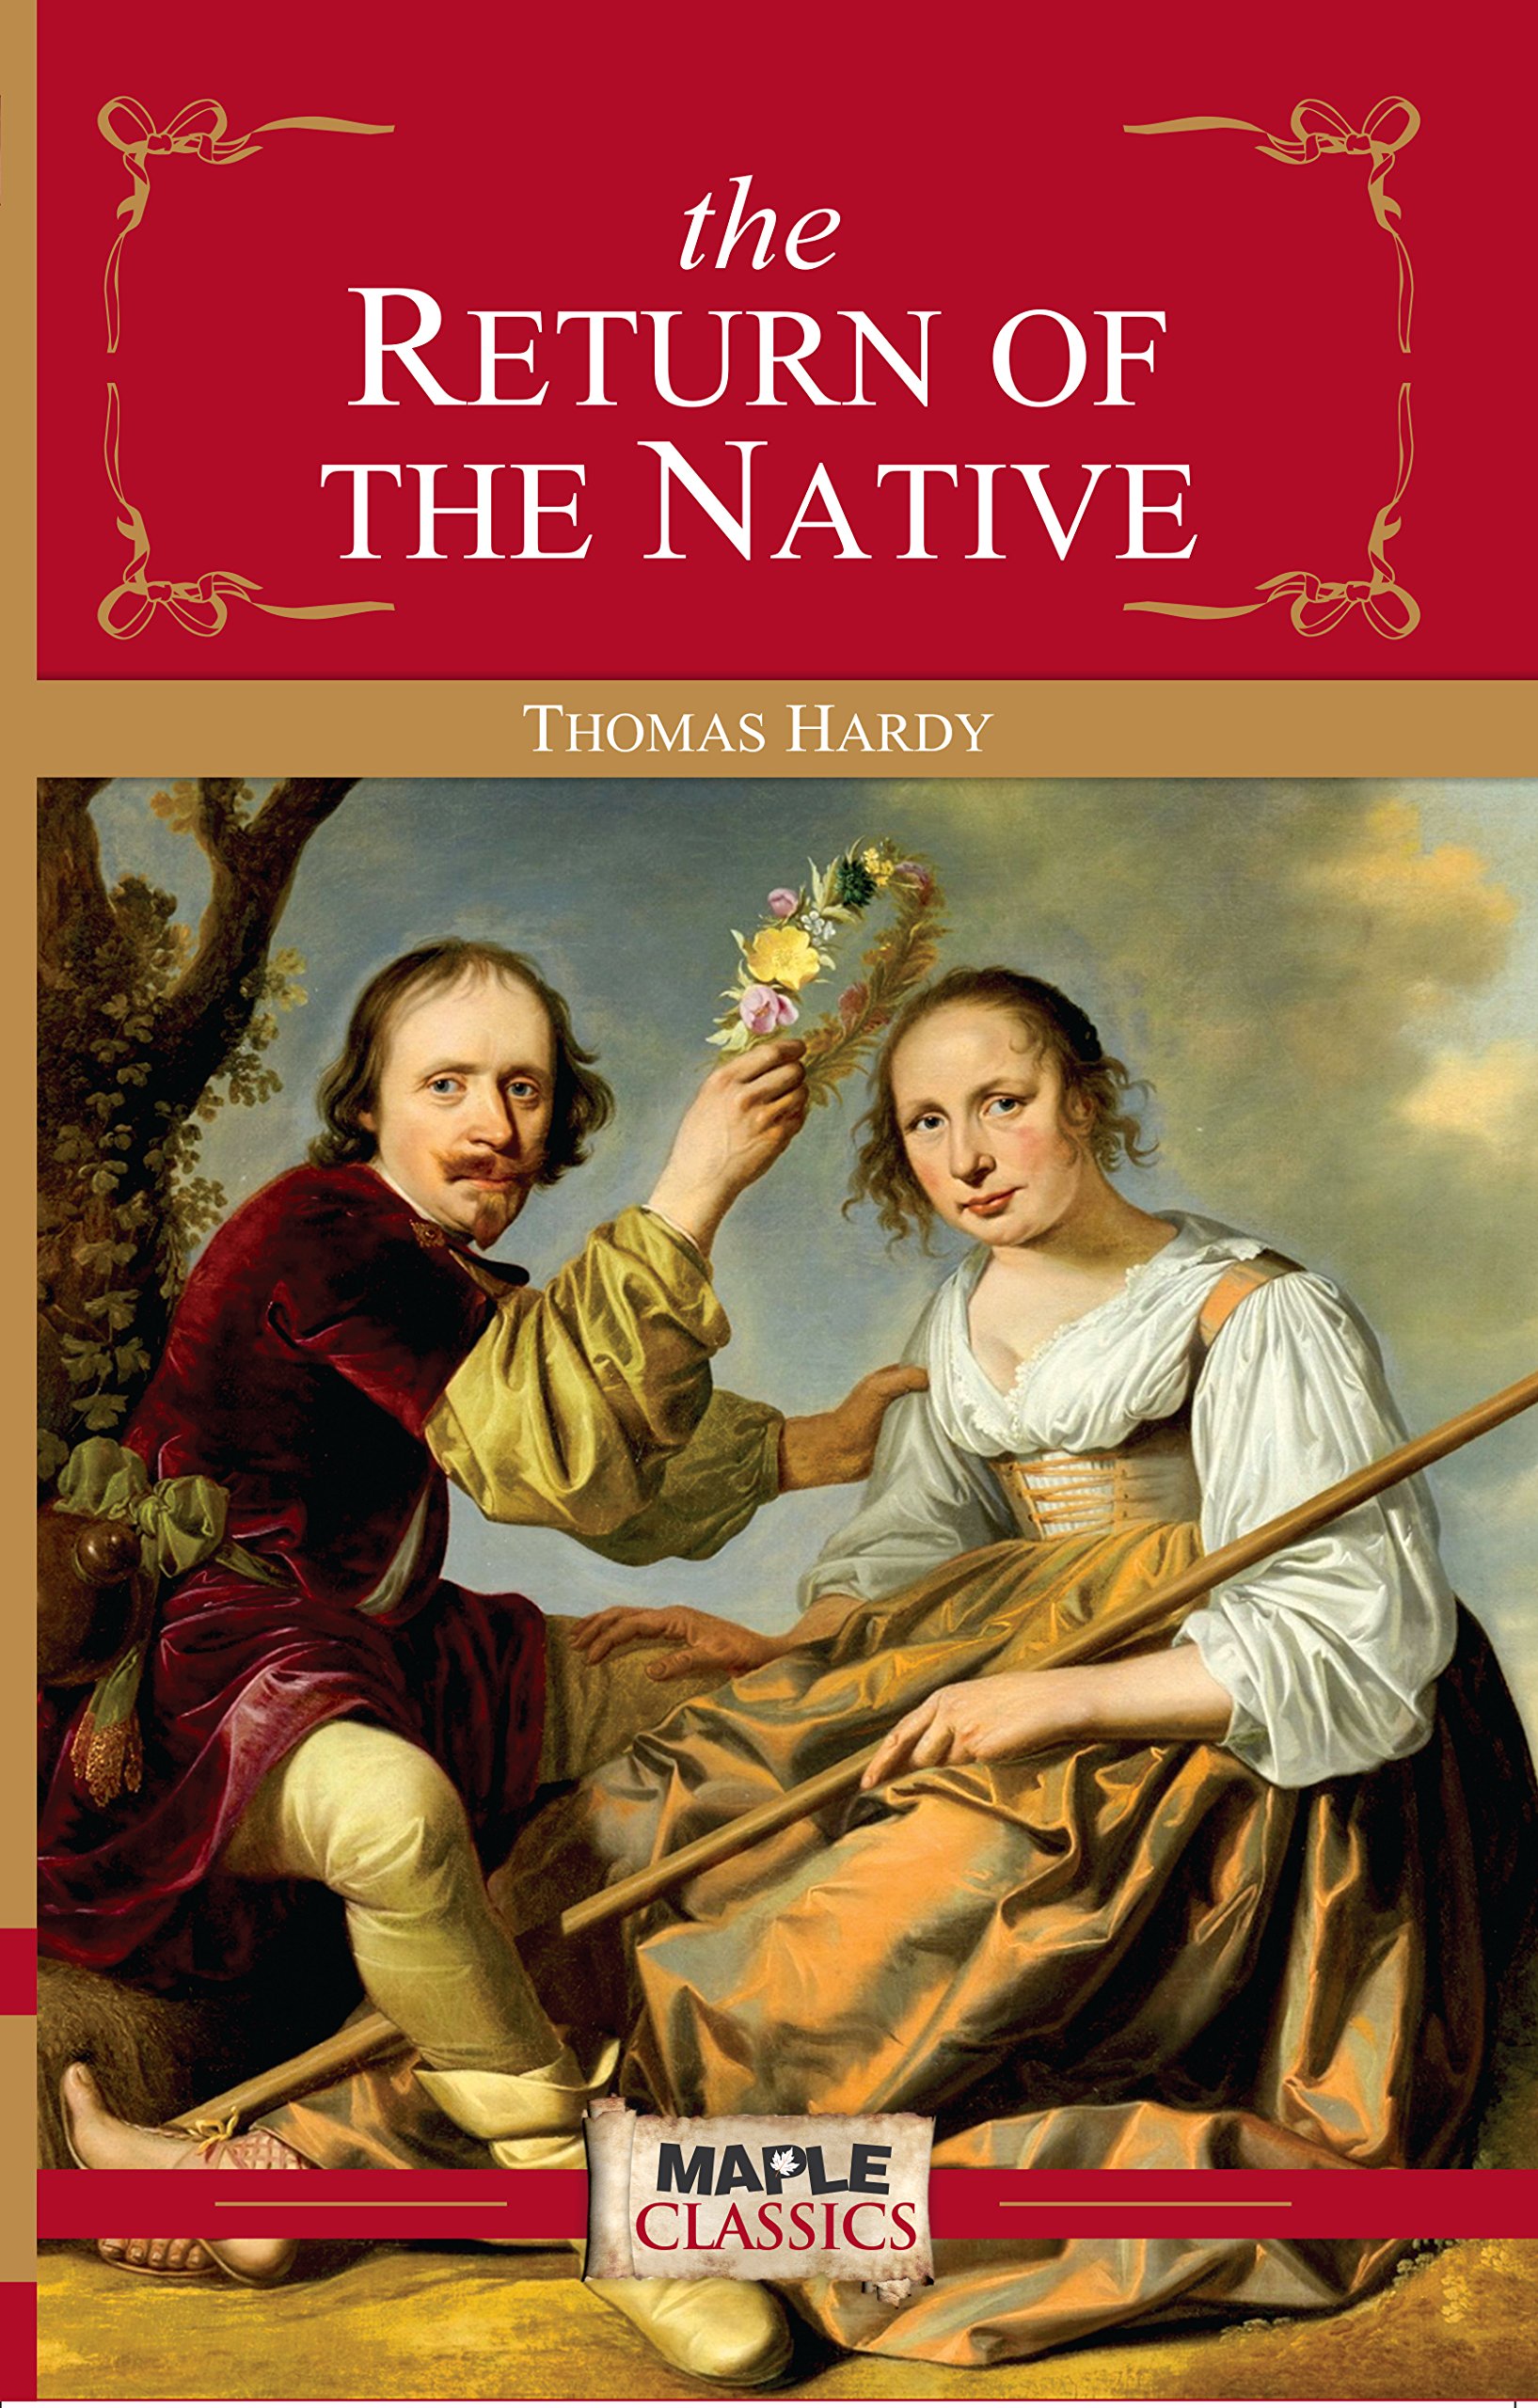 Thomas Hardy ಯ “The Return of the Native” ಸ್ವ-ಅಸ್ತಿತ್ವದ ನೆರಳು